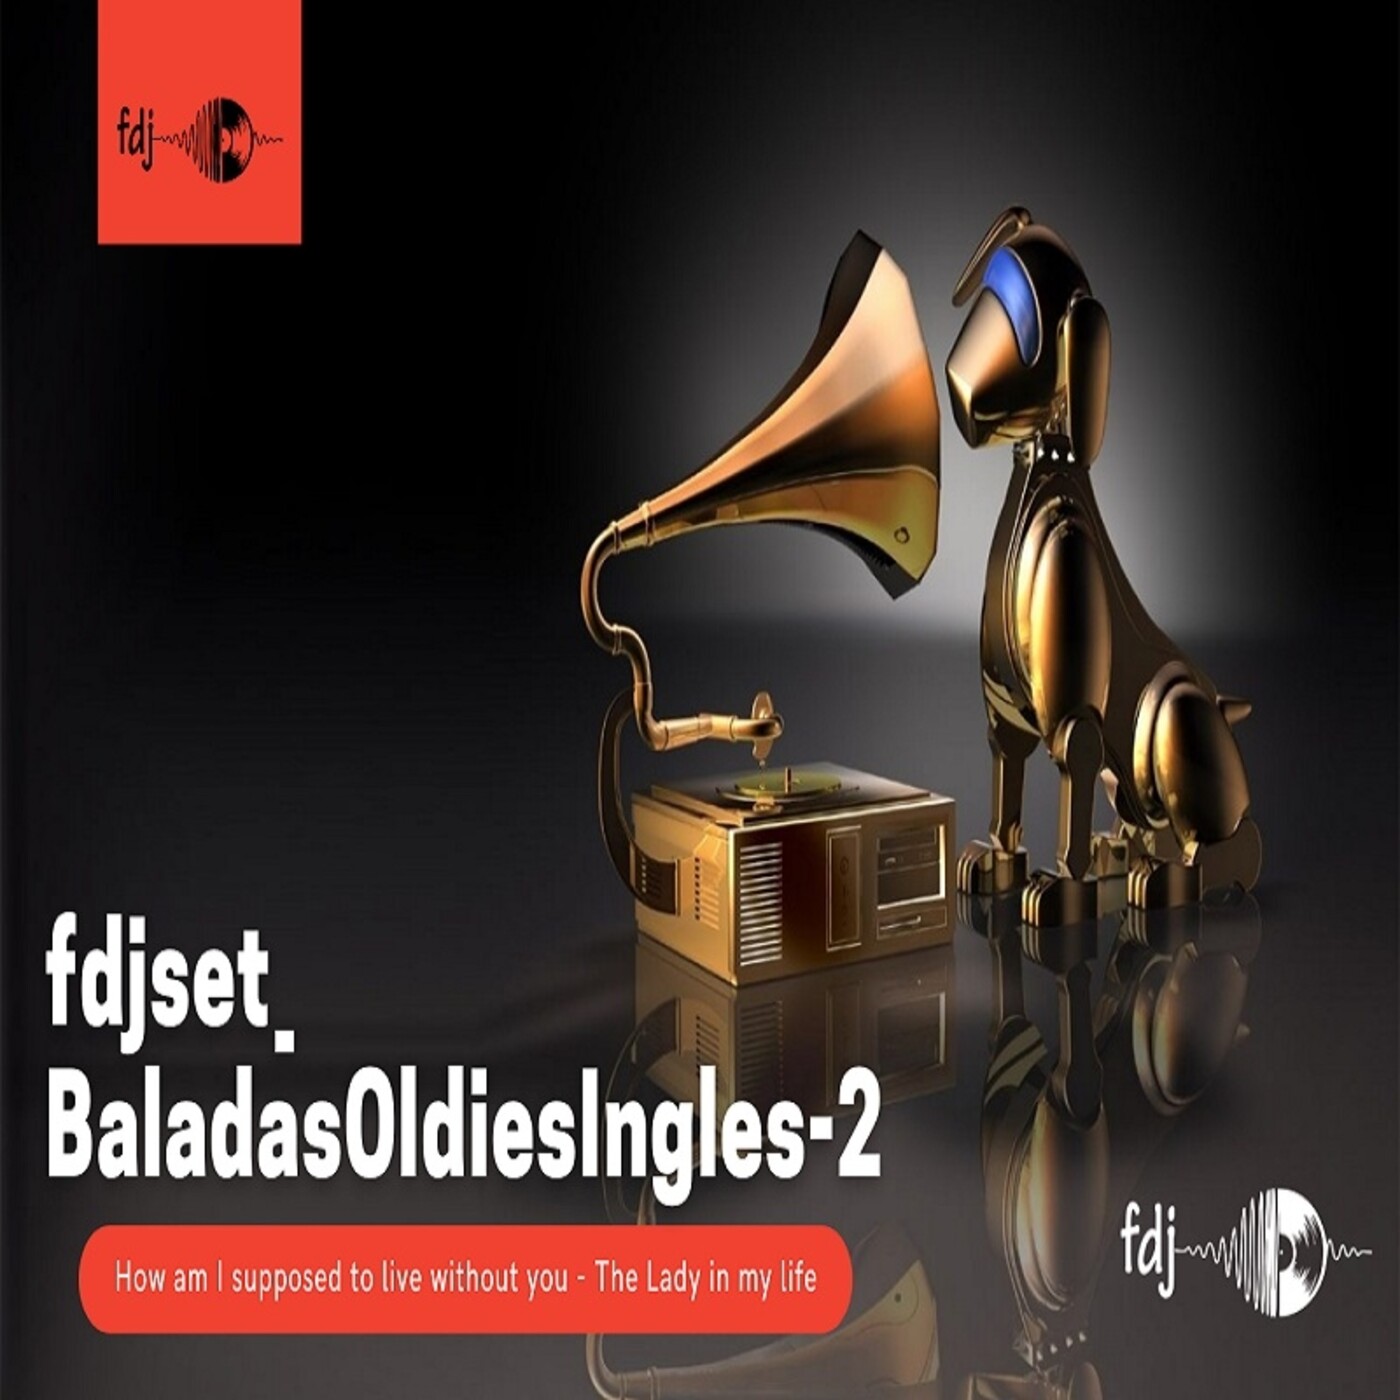 fdjset_BaladasOldiesIngles-2